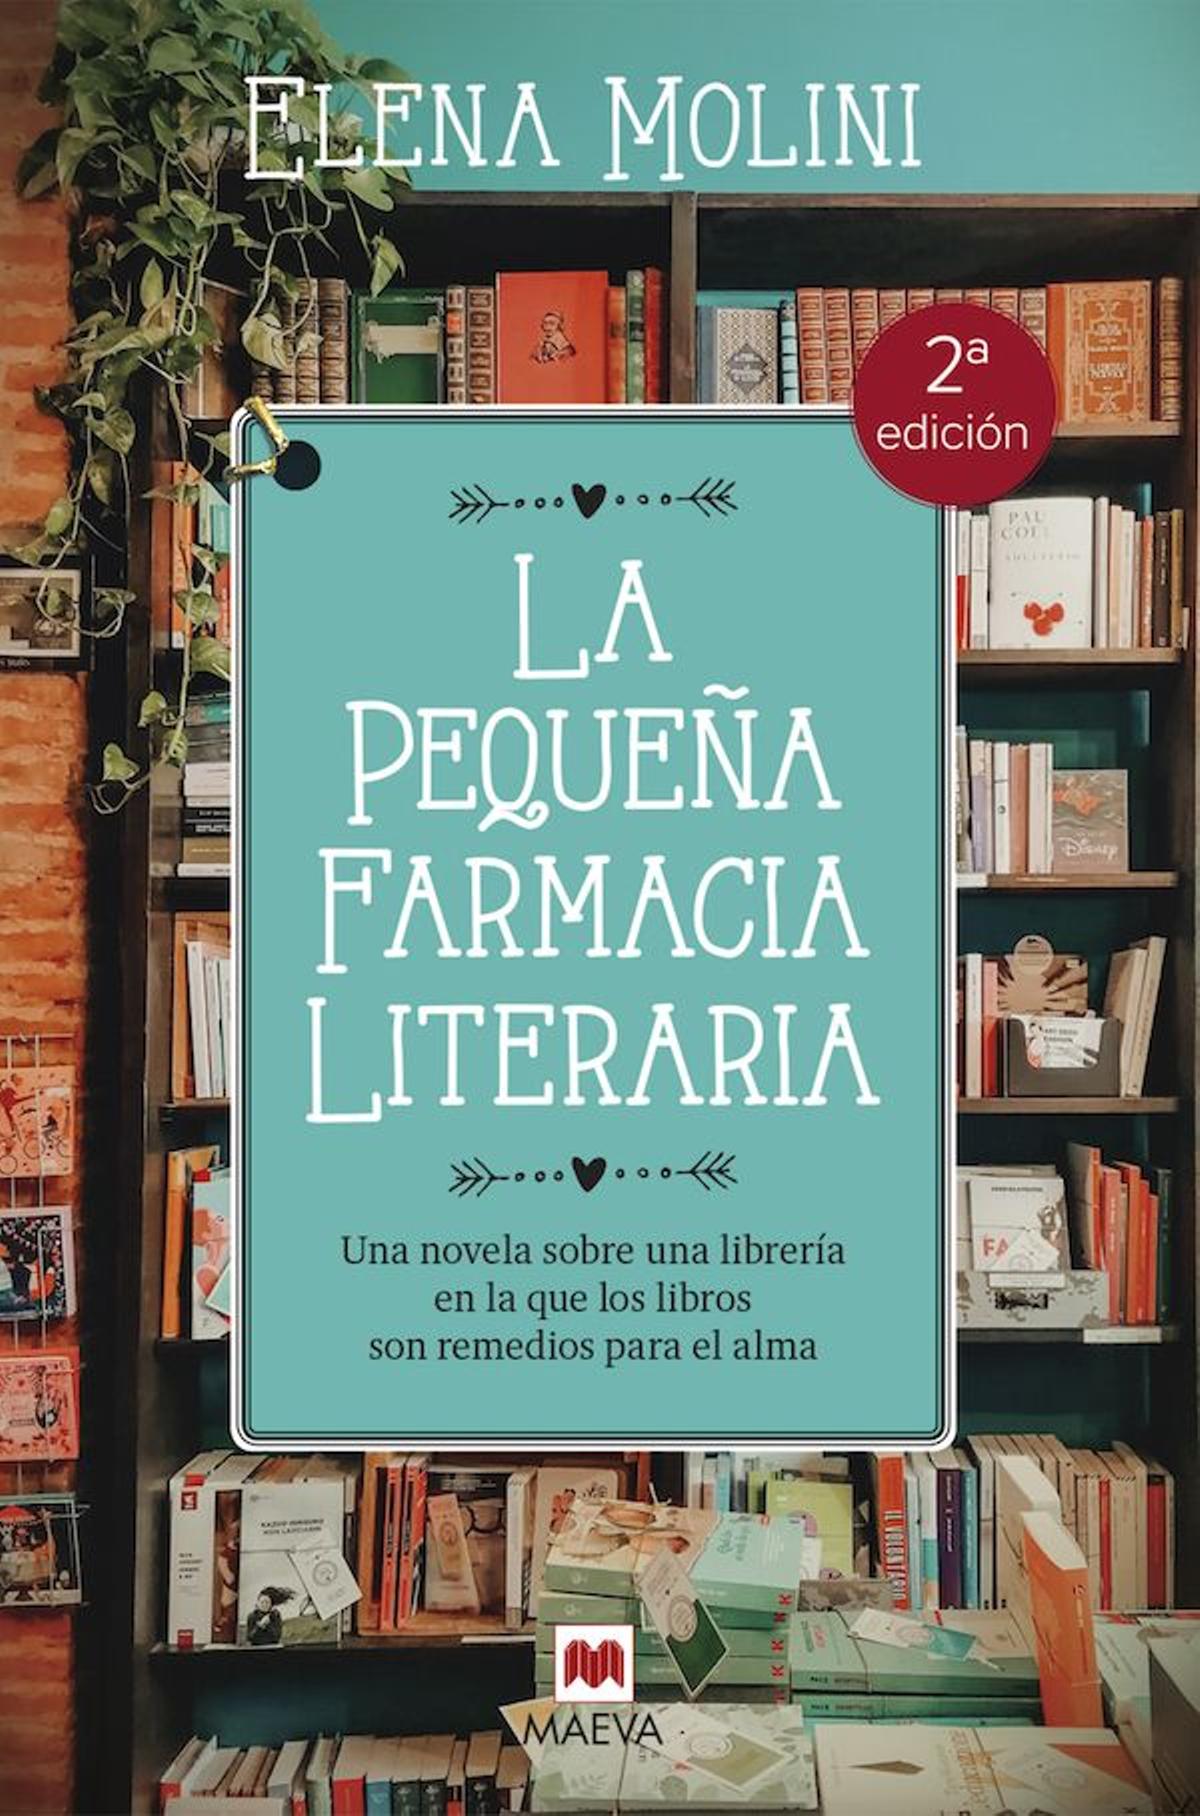 La novela ‘La pequeña farmacia literaria’, de Elena Molini (Maeva).